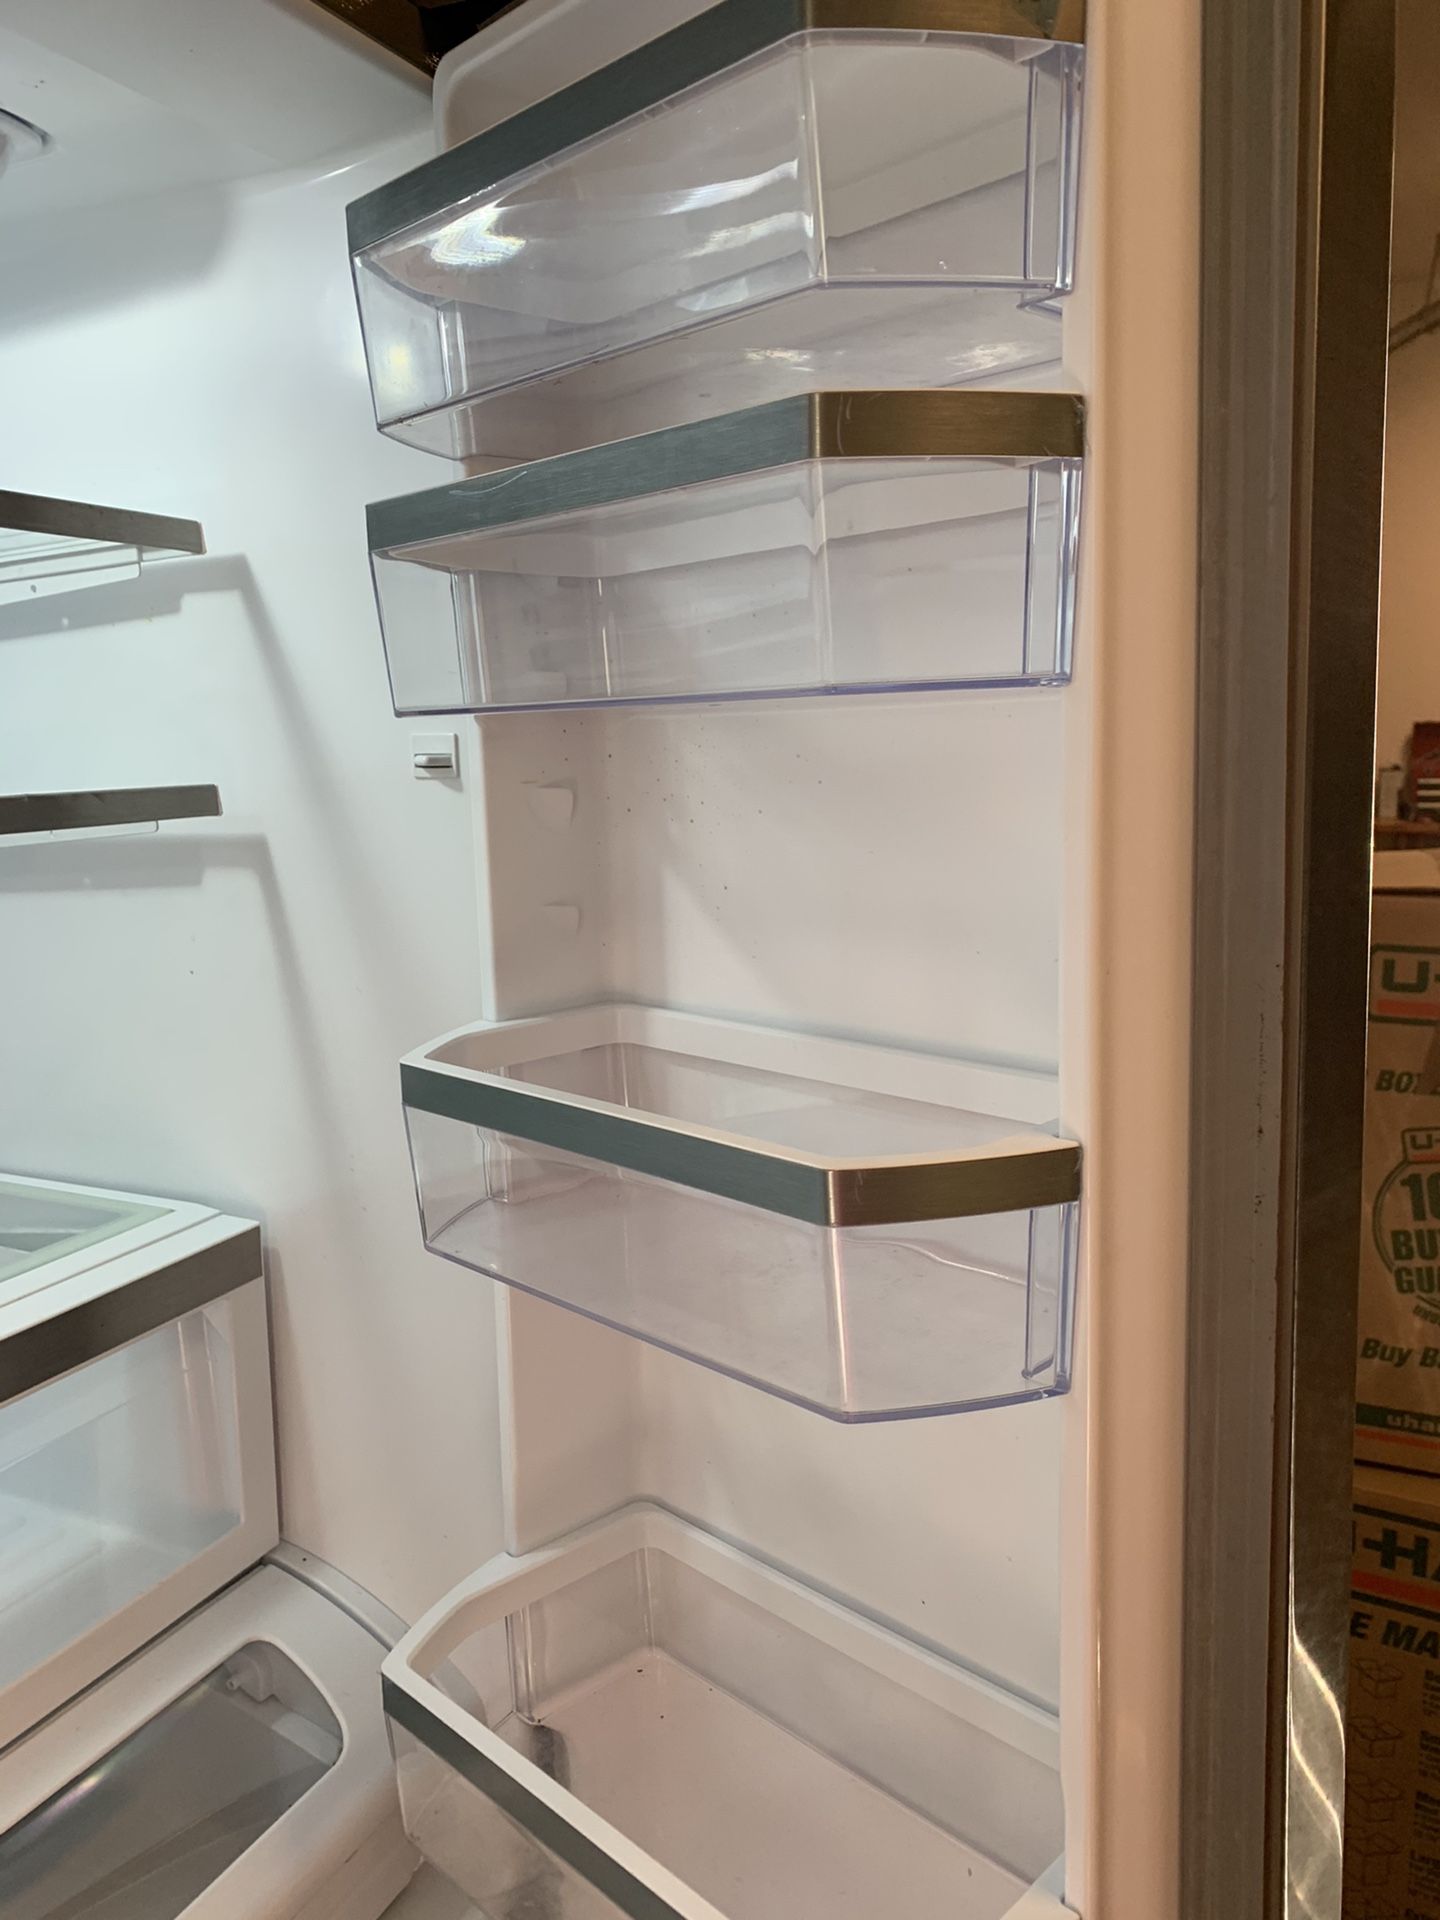 Samsung 36 refrigerator with bottom freezer